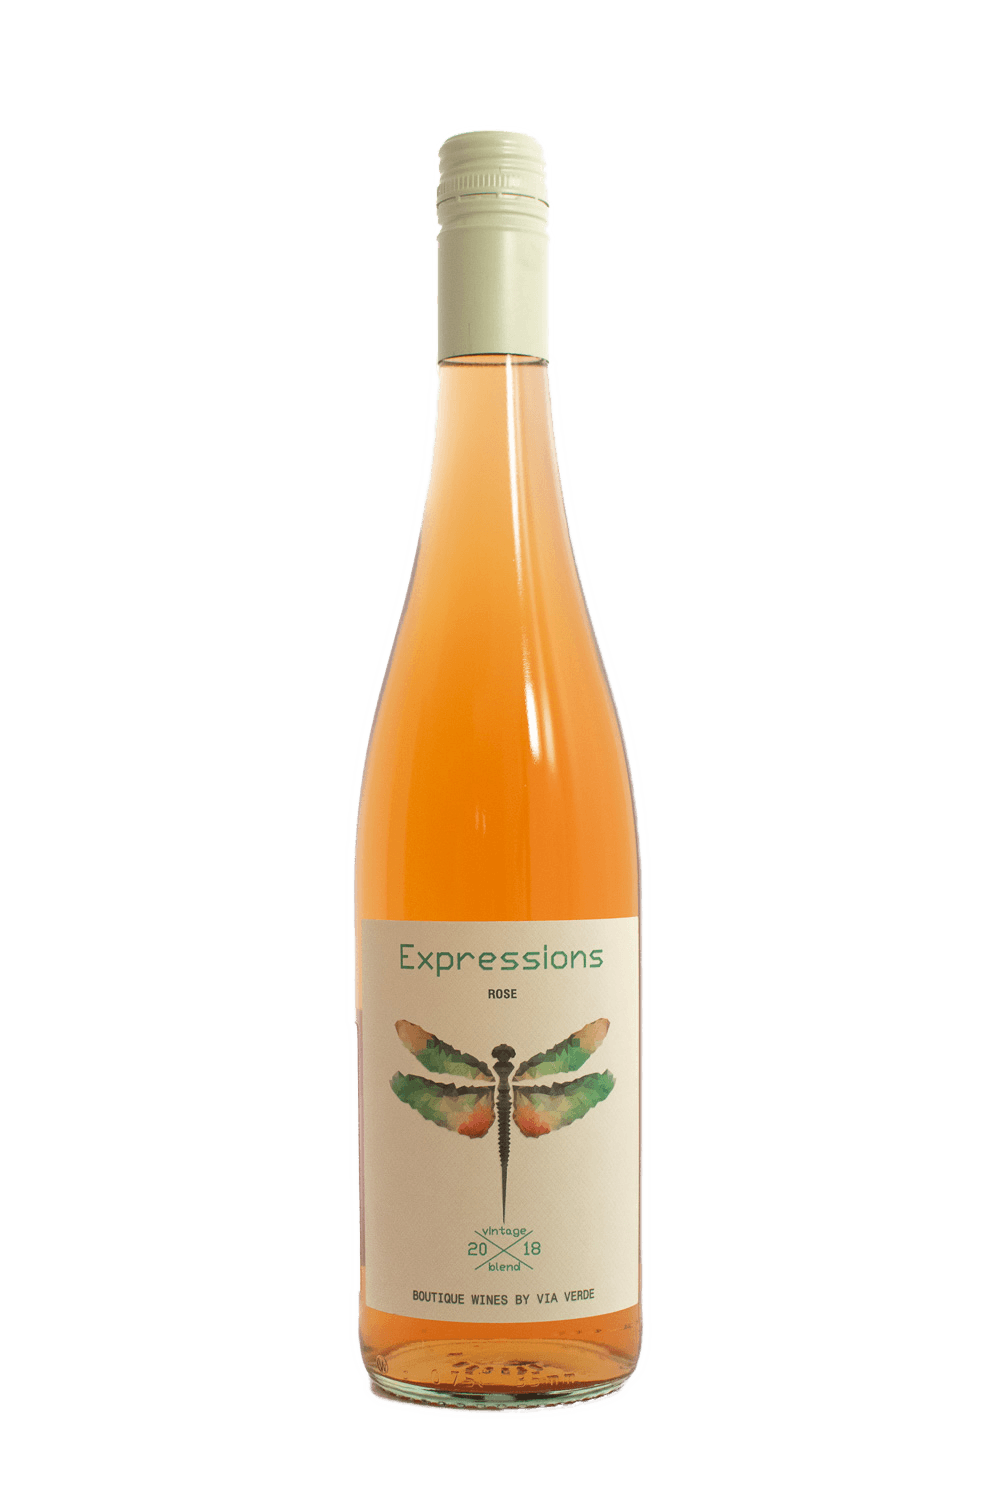 Expressions Rosé PGI Via Verde - The Blend Wines